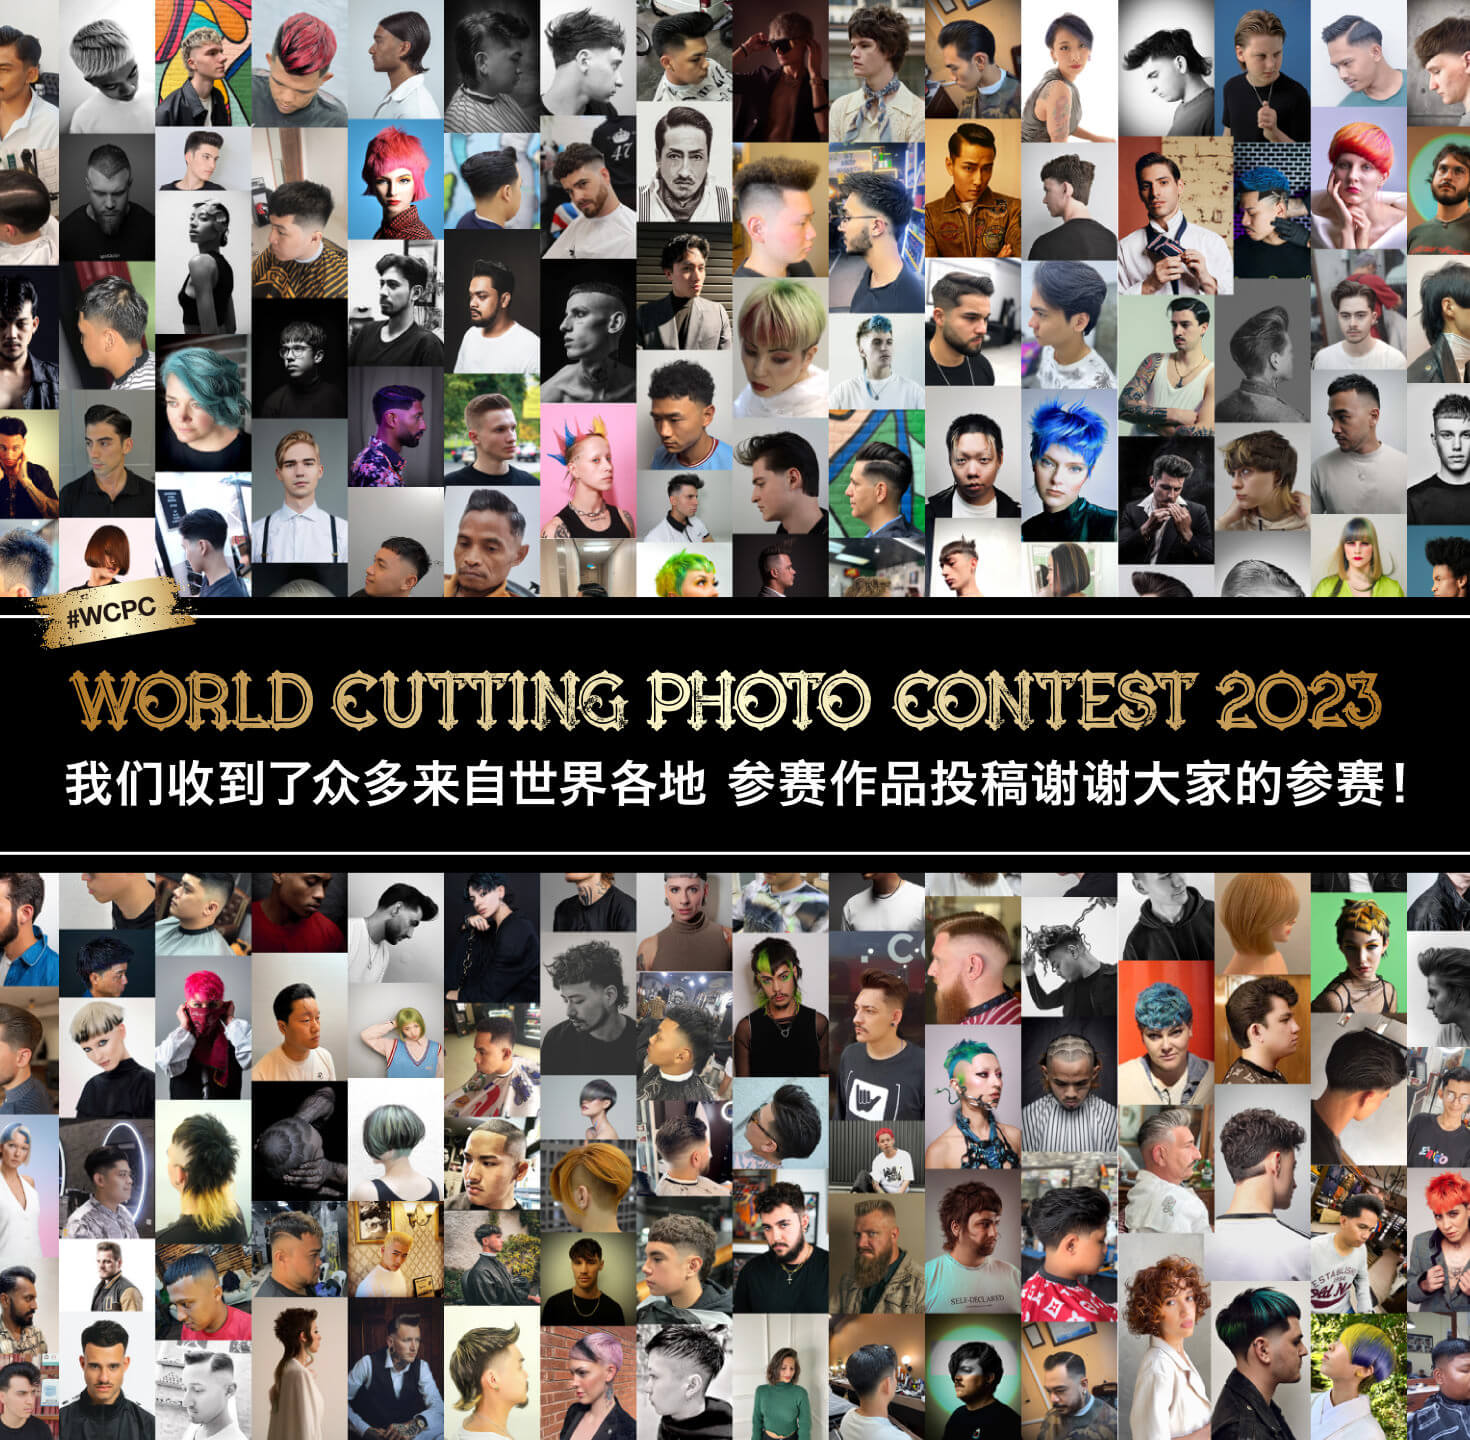 WORLD CUTTING PHOTO CONTEST 2023 我们收到了众多来自世界各地 参赛作品投稿谢谢大家的参赛!